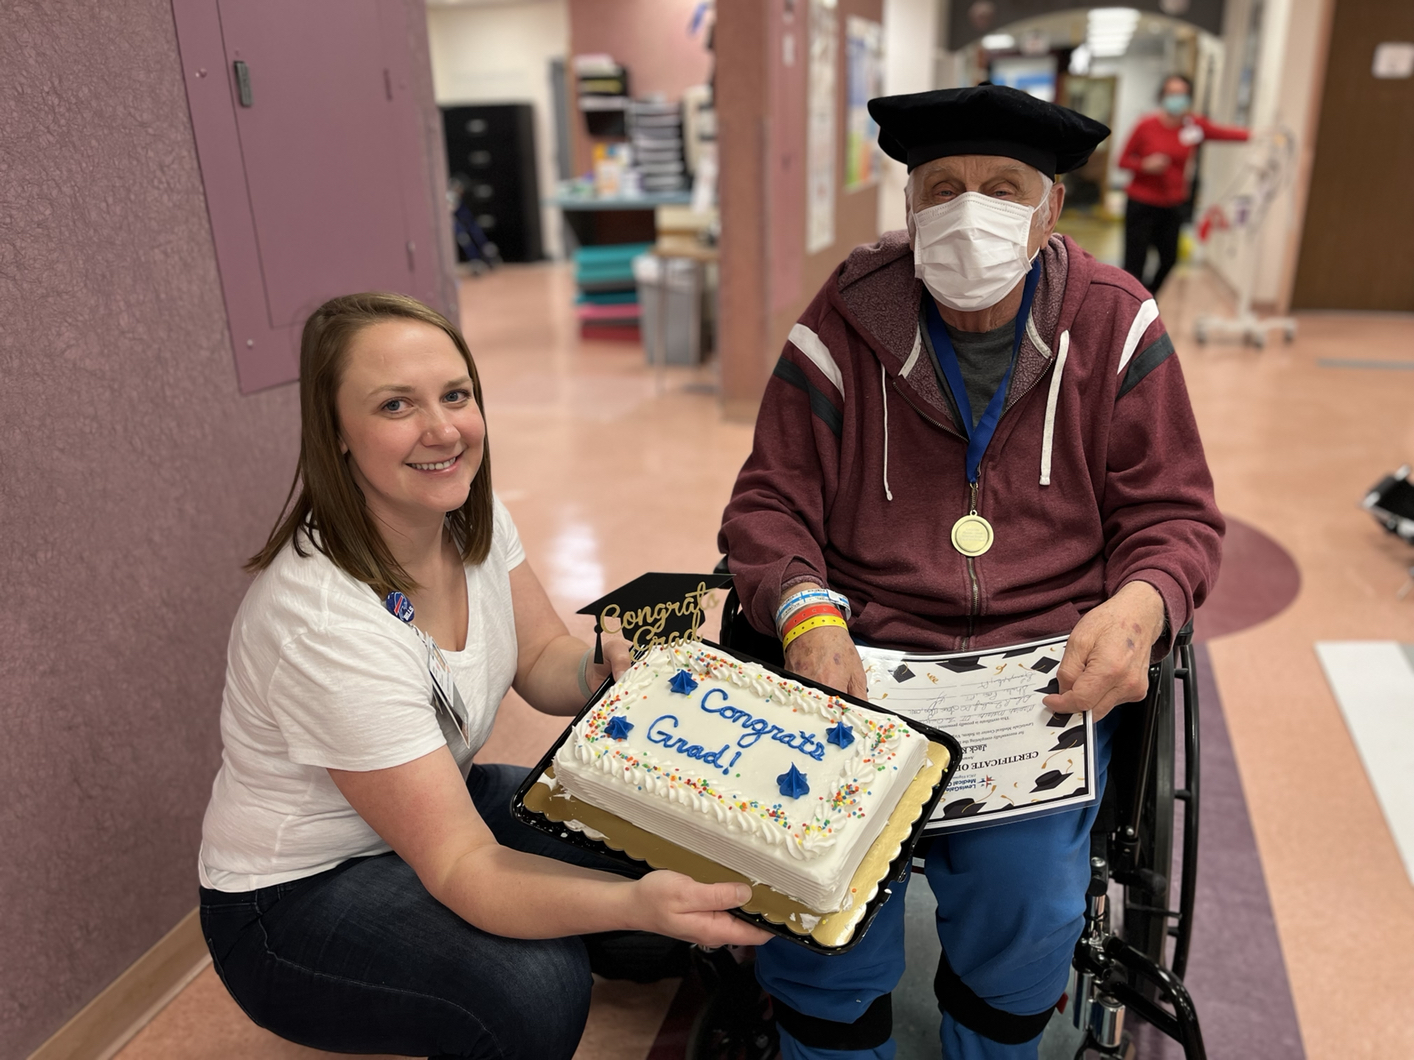 Jack Kingrea and Mariah celebrating his rehab graduation with a cake.